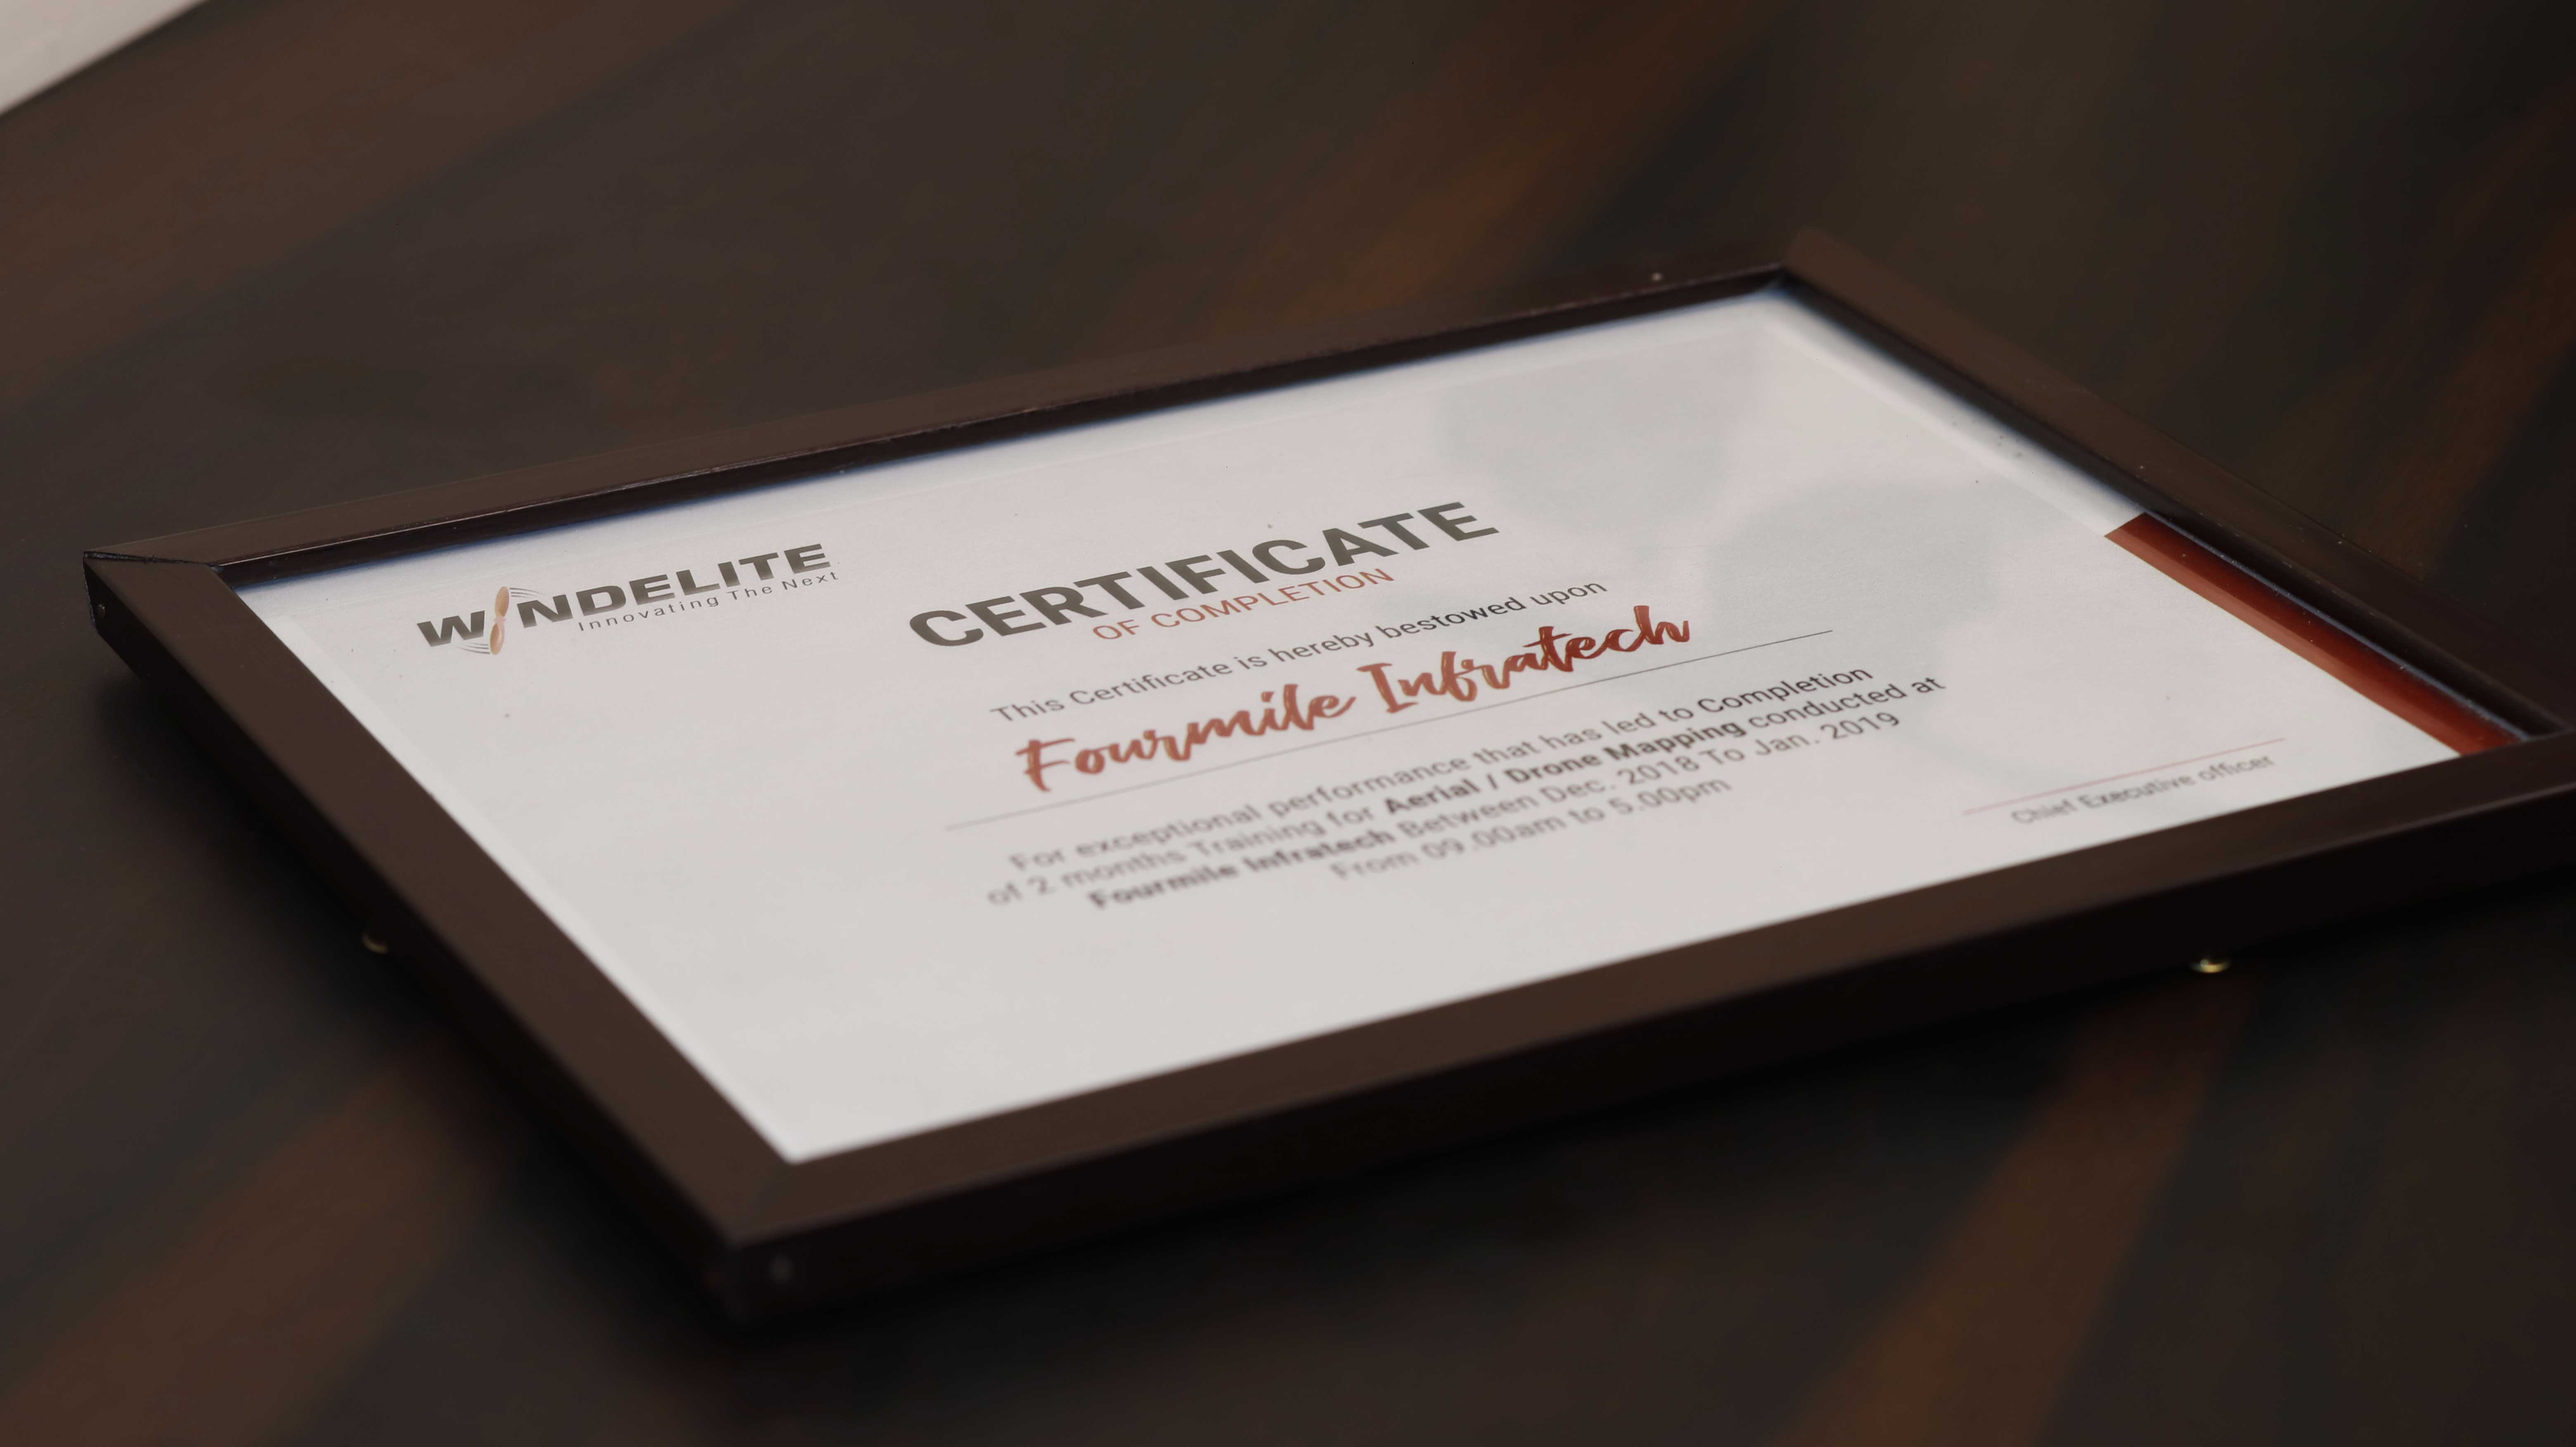 Windelite Drone Certificate